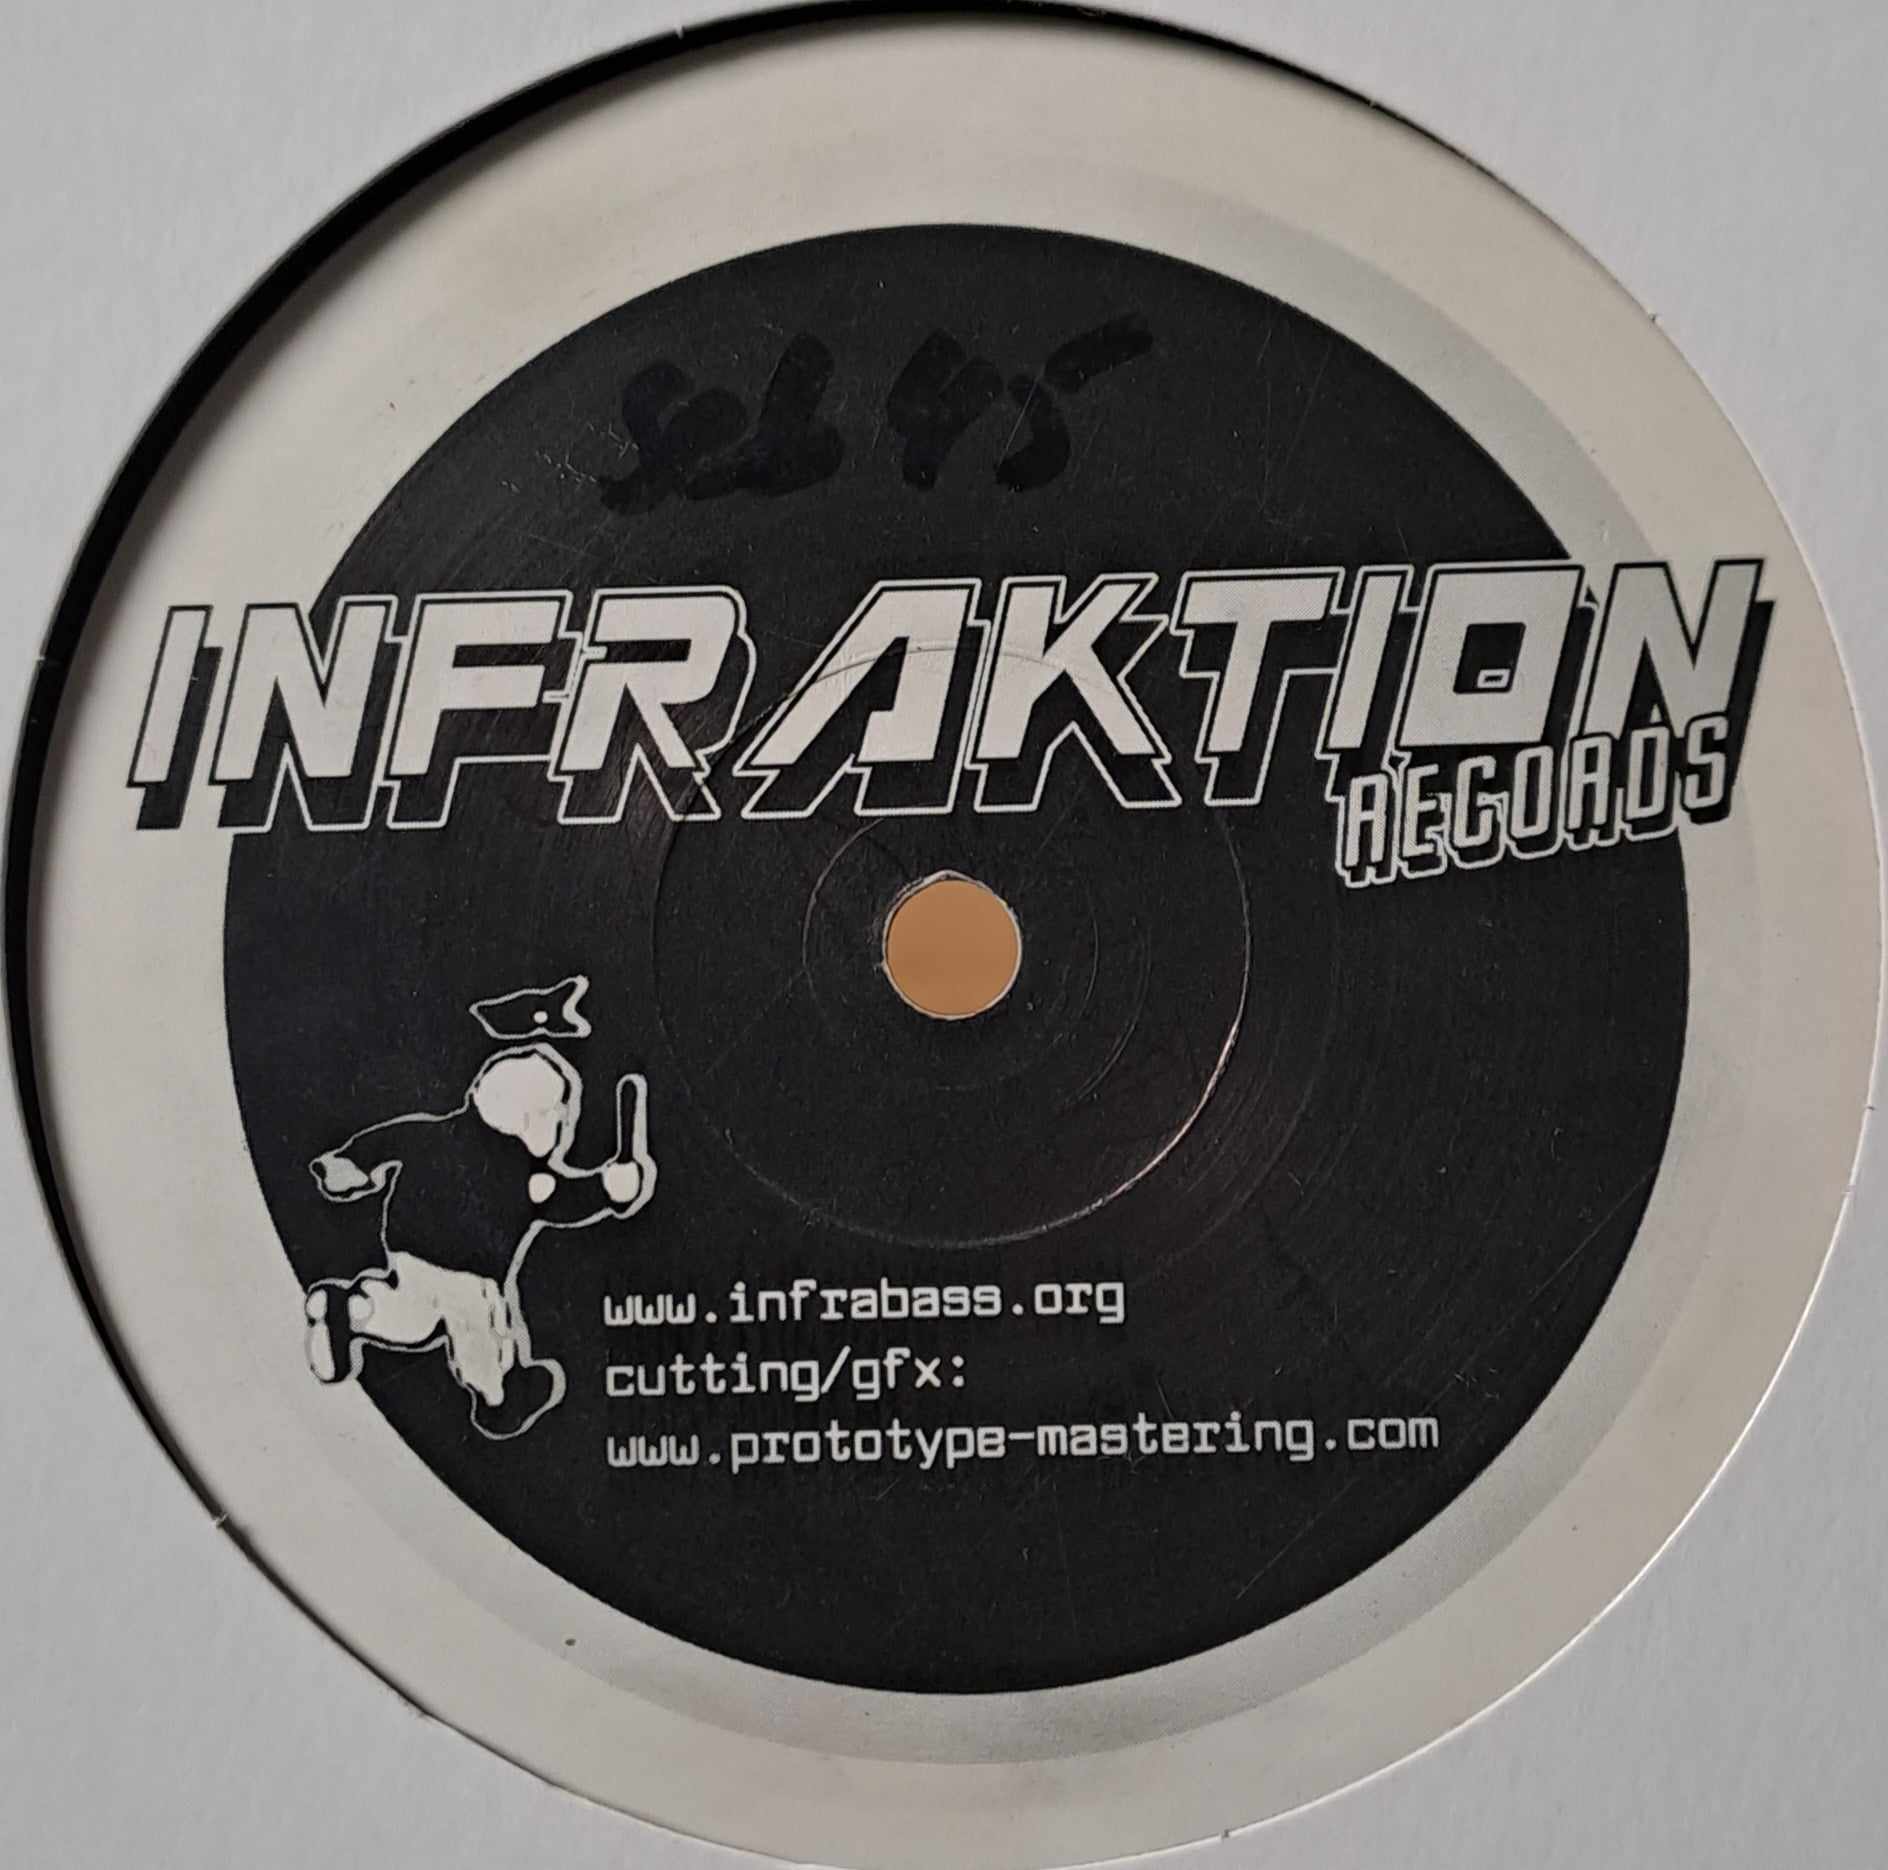 Infraktion 07 - vinyle hardcore